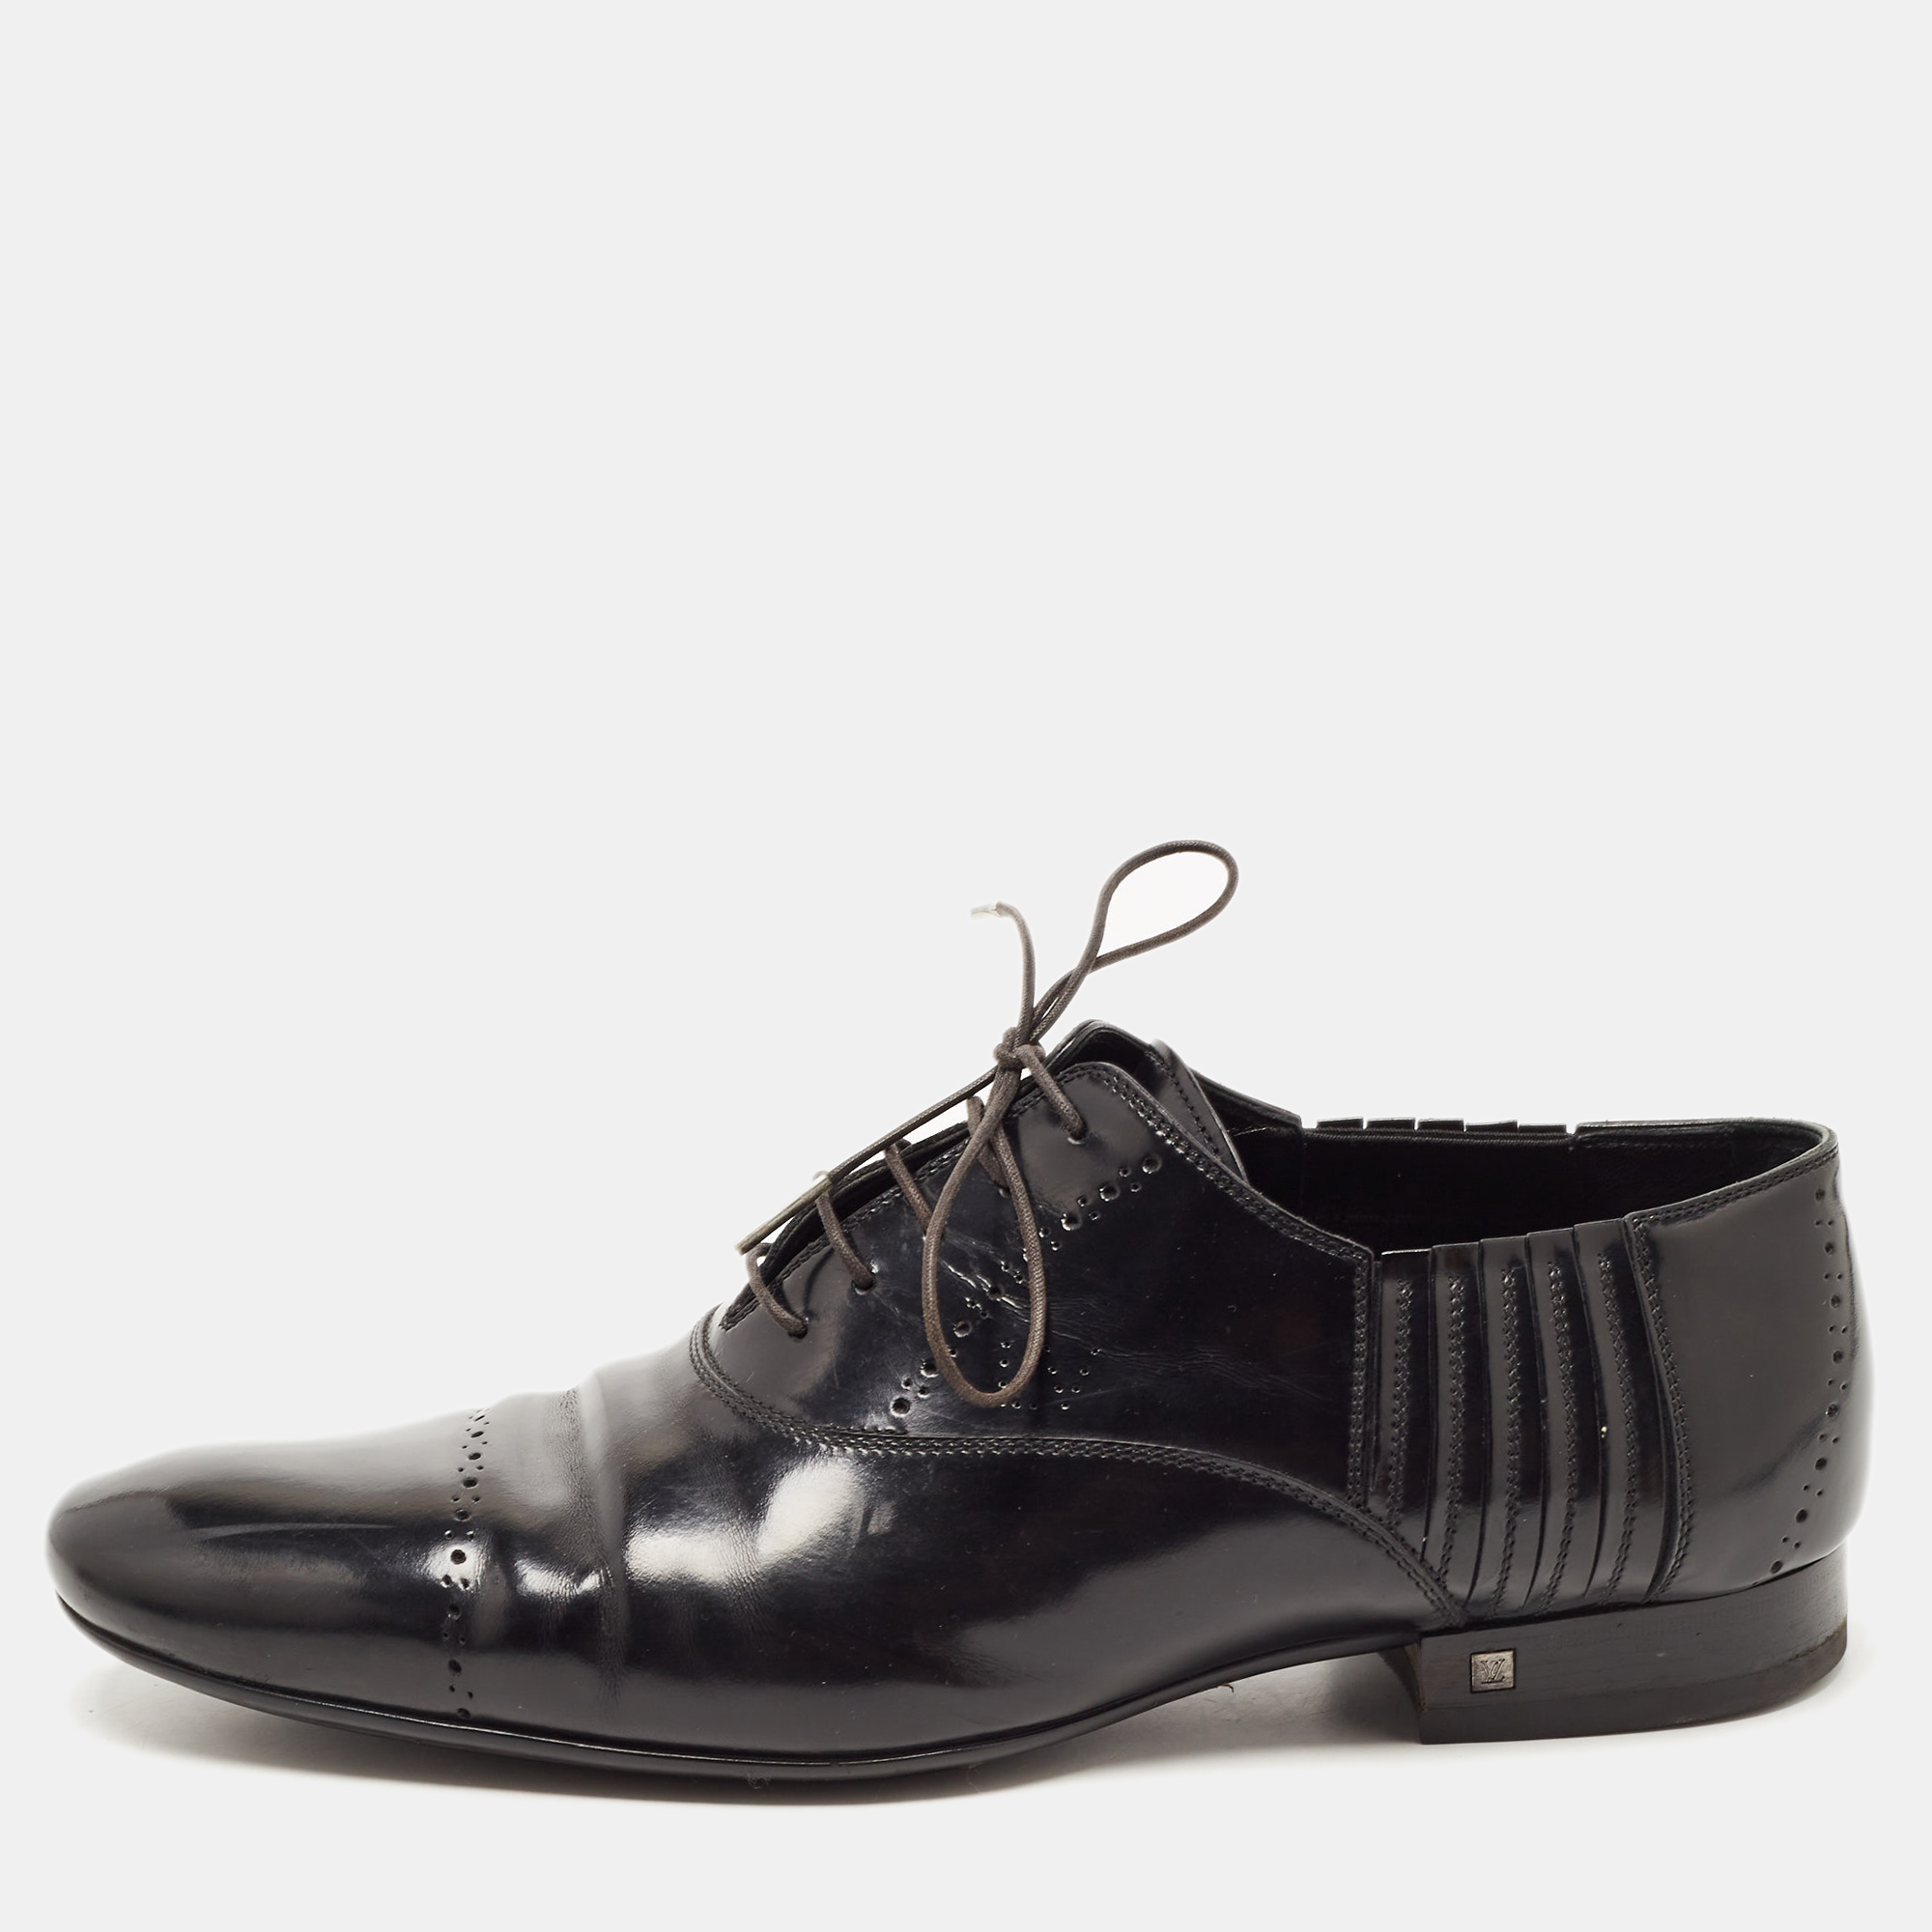 Louis Vuitton Black Brogue Leather Lace Up Oxford Size 42